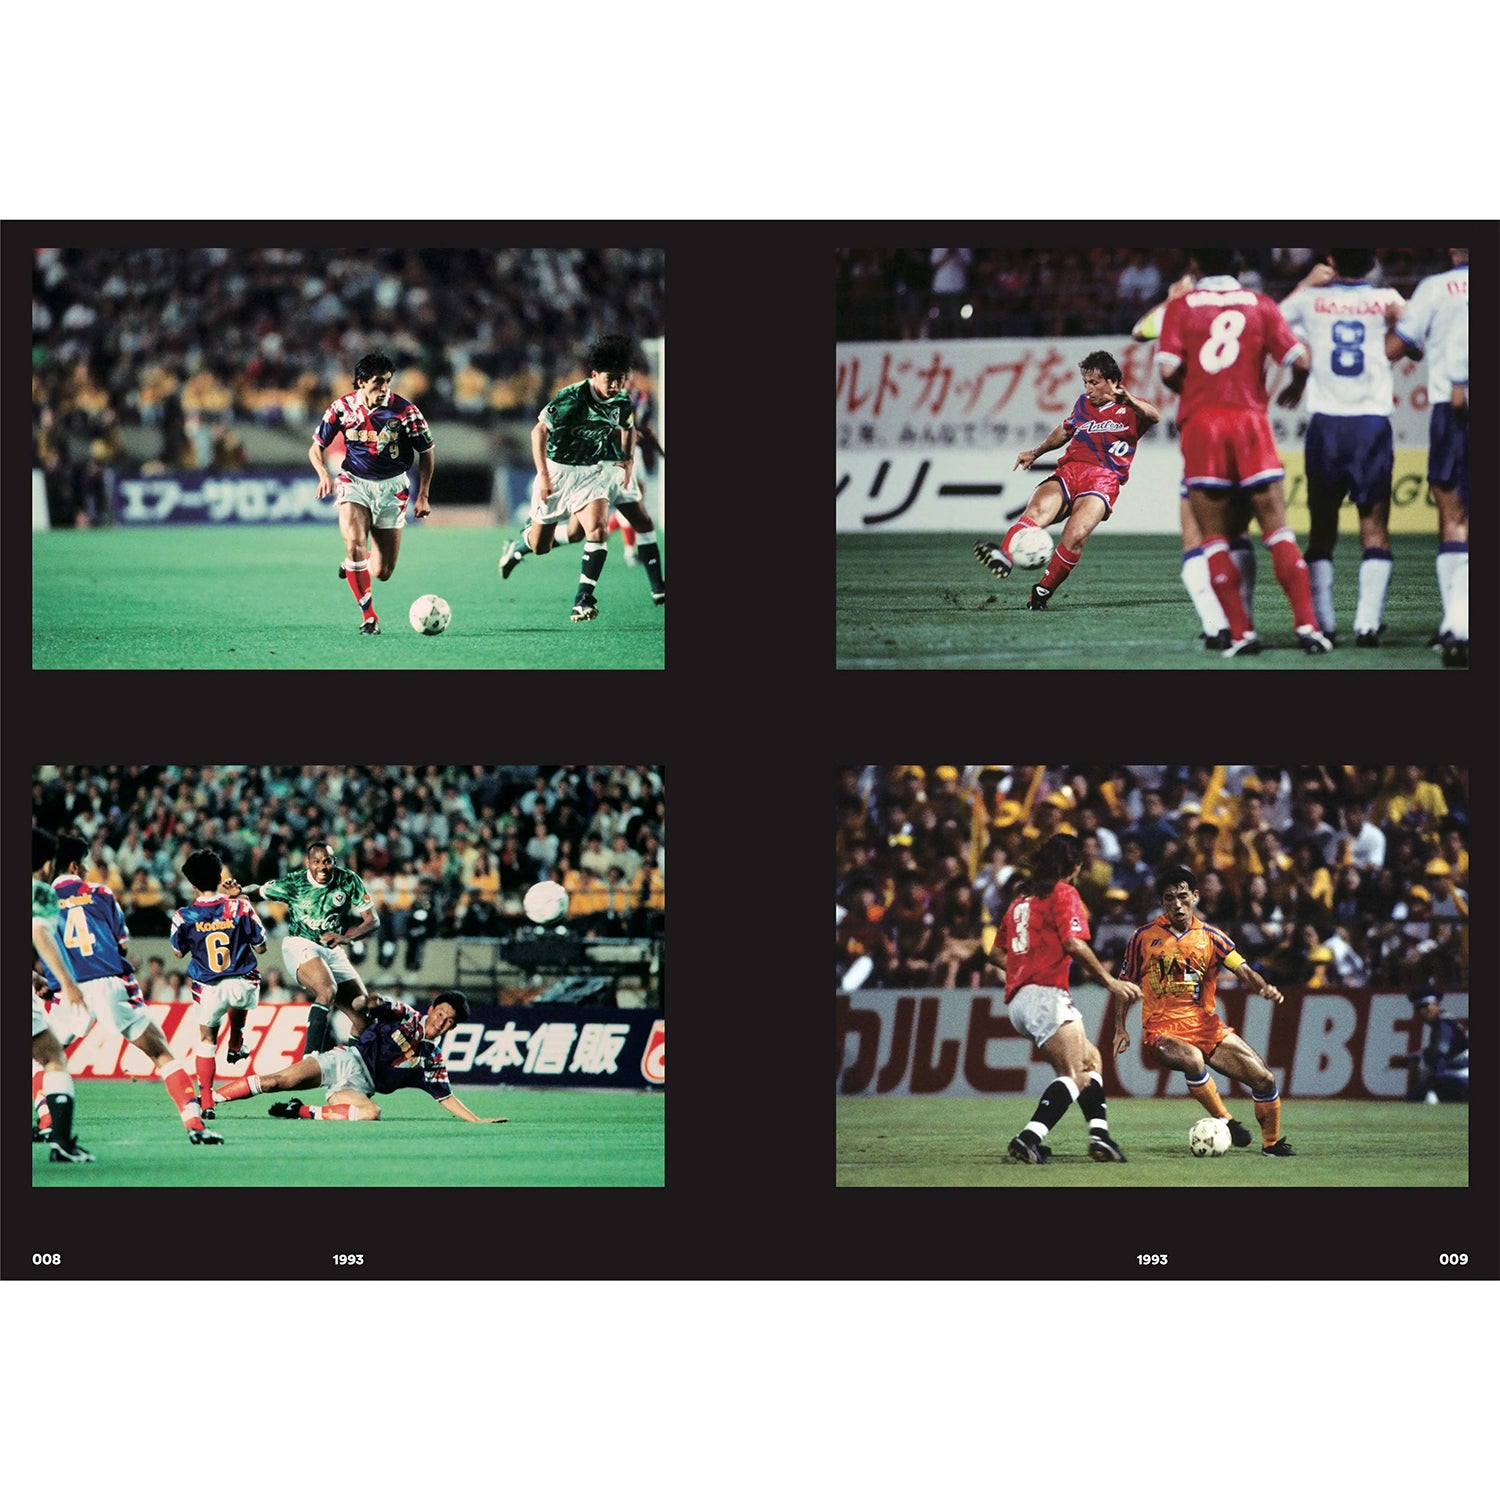 Shukyu Magazine: The Design Story of J.League